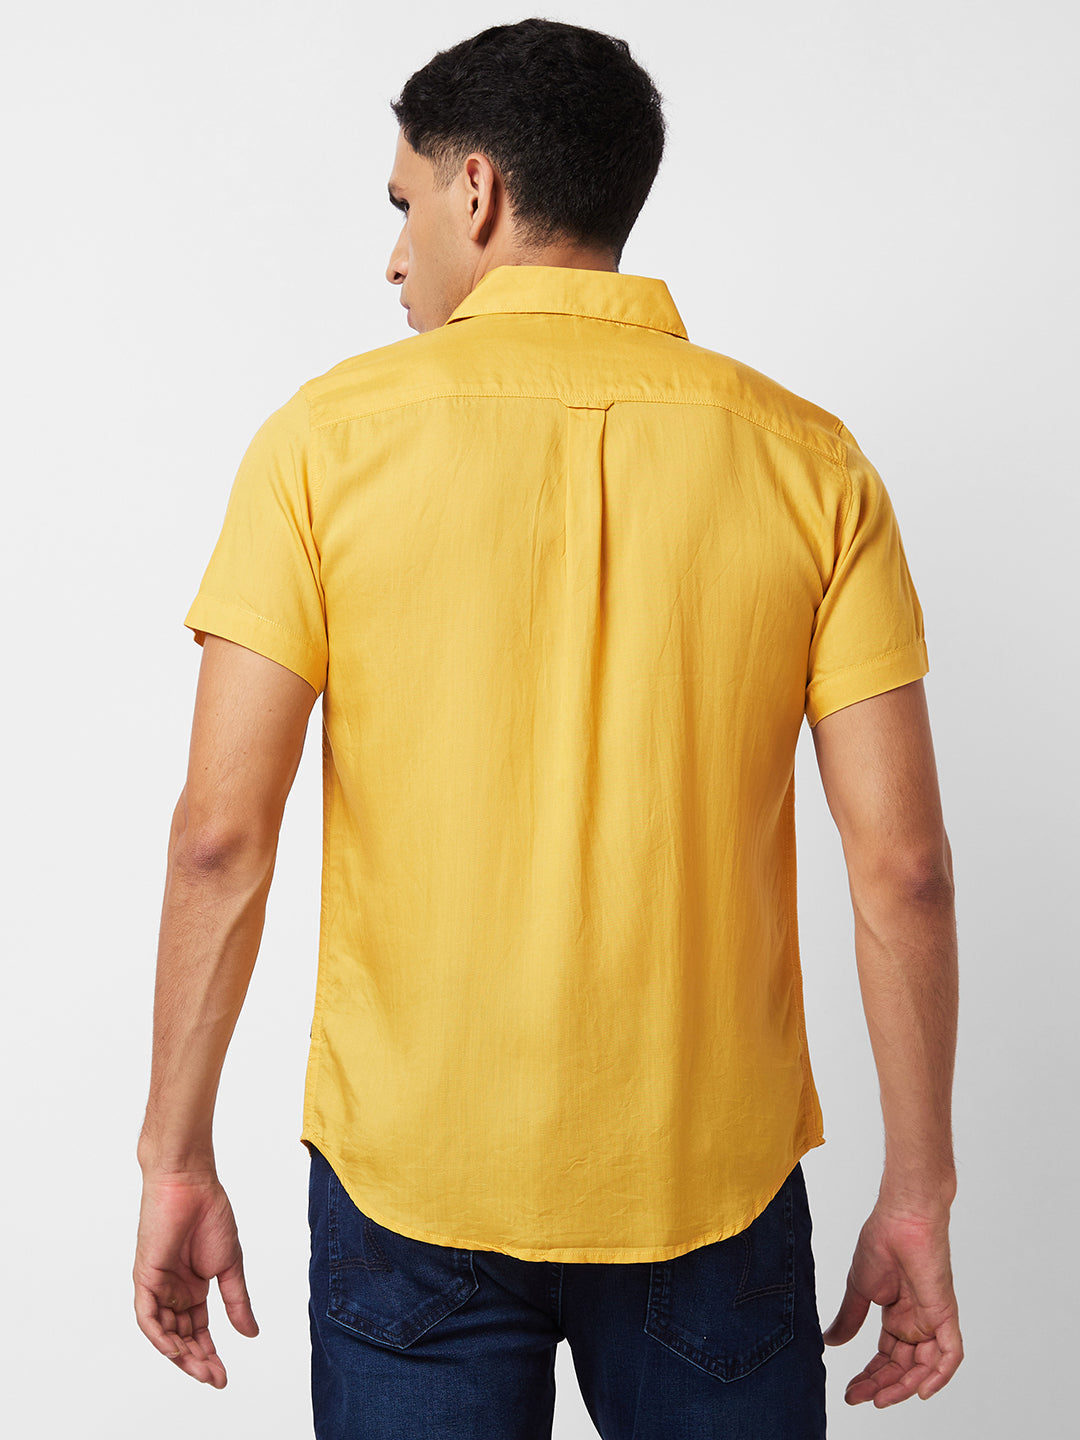 Spykar Yellow Solid Shirt For Men